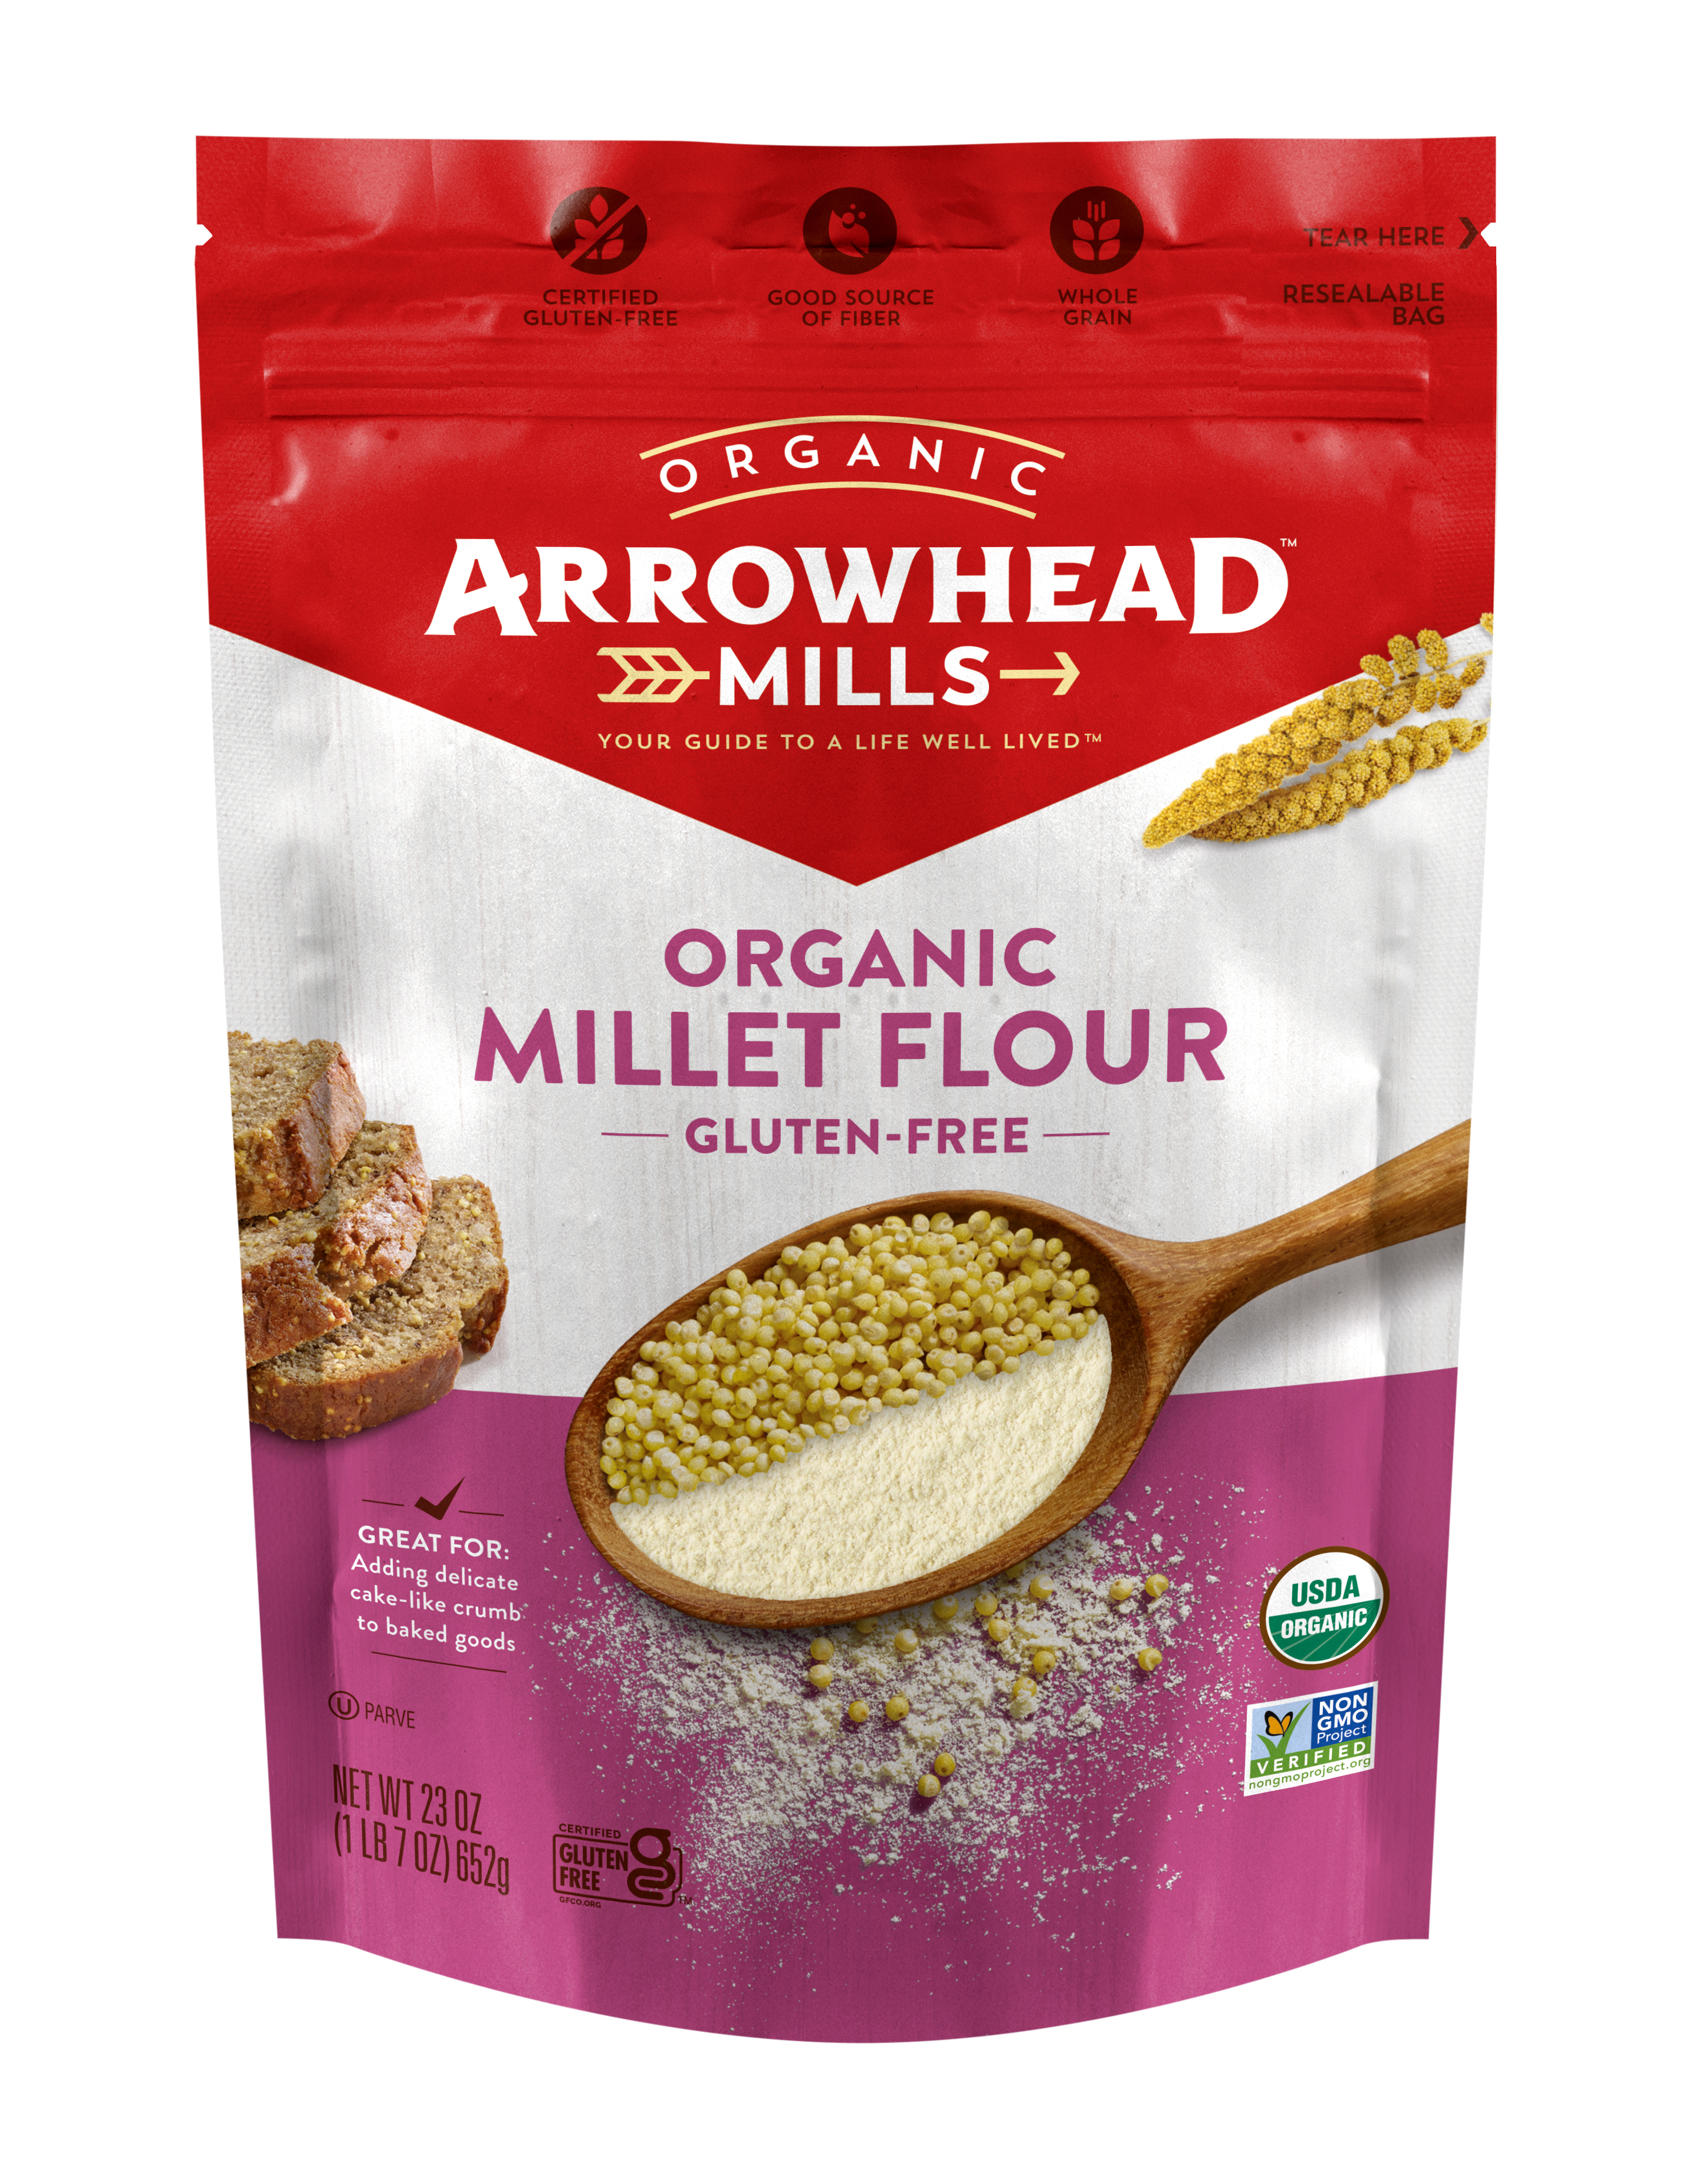 Arrowhead Mills Millet Flour 6 units per case 23.0 oz